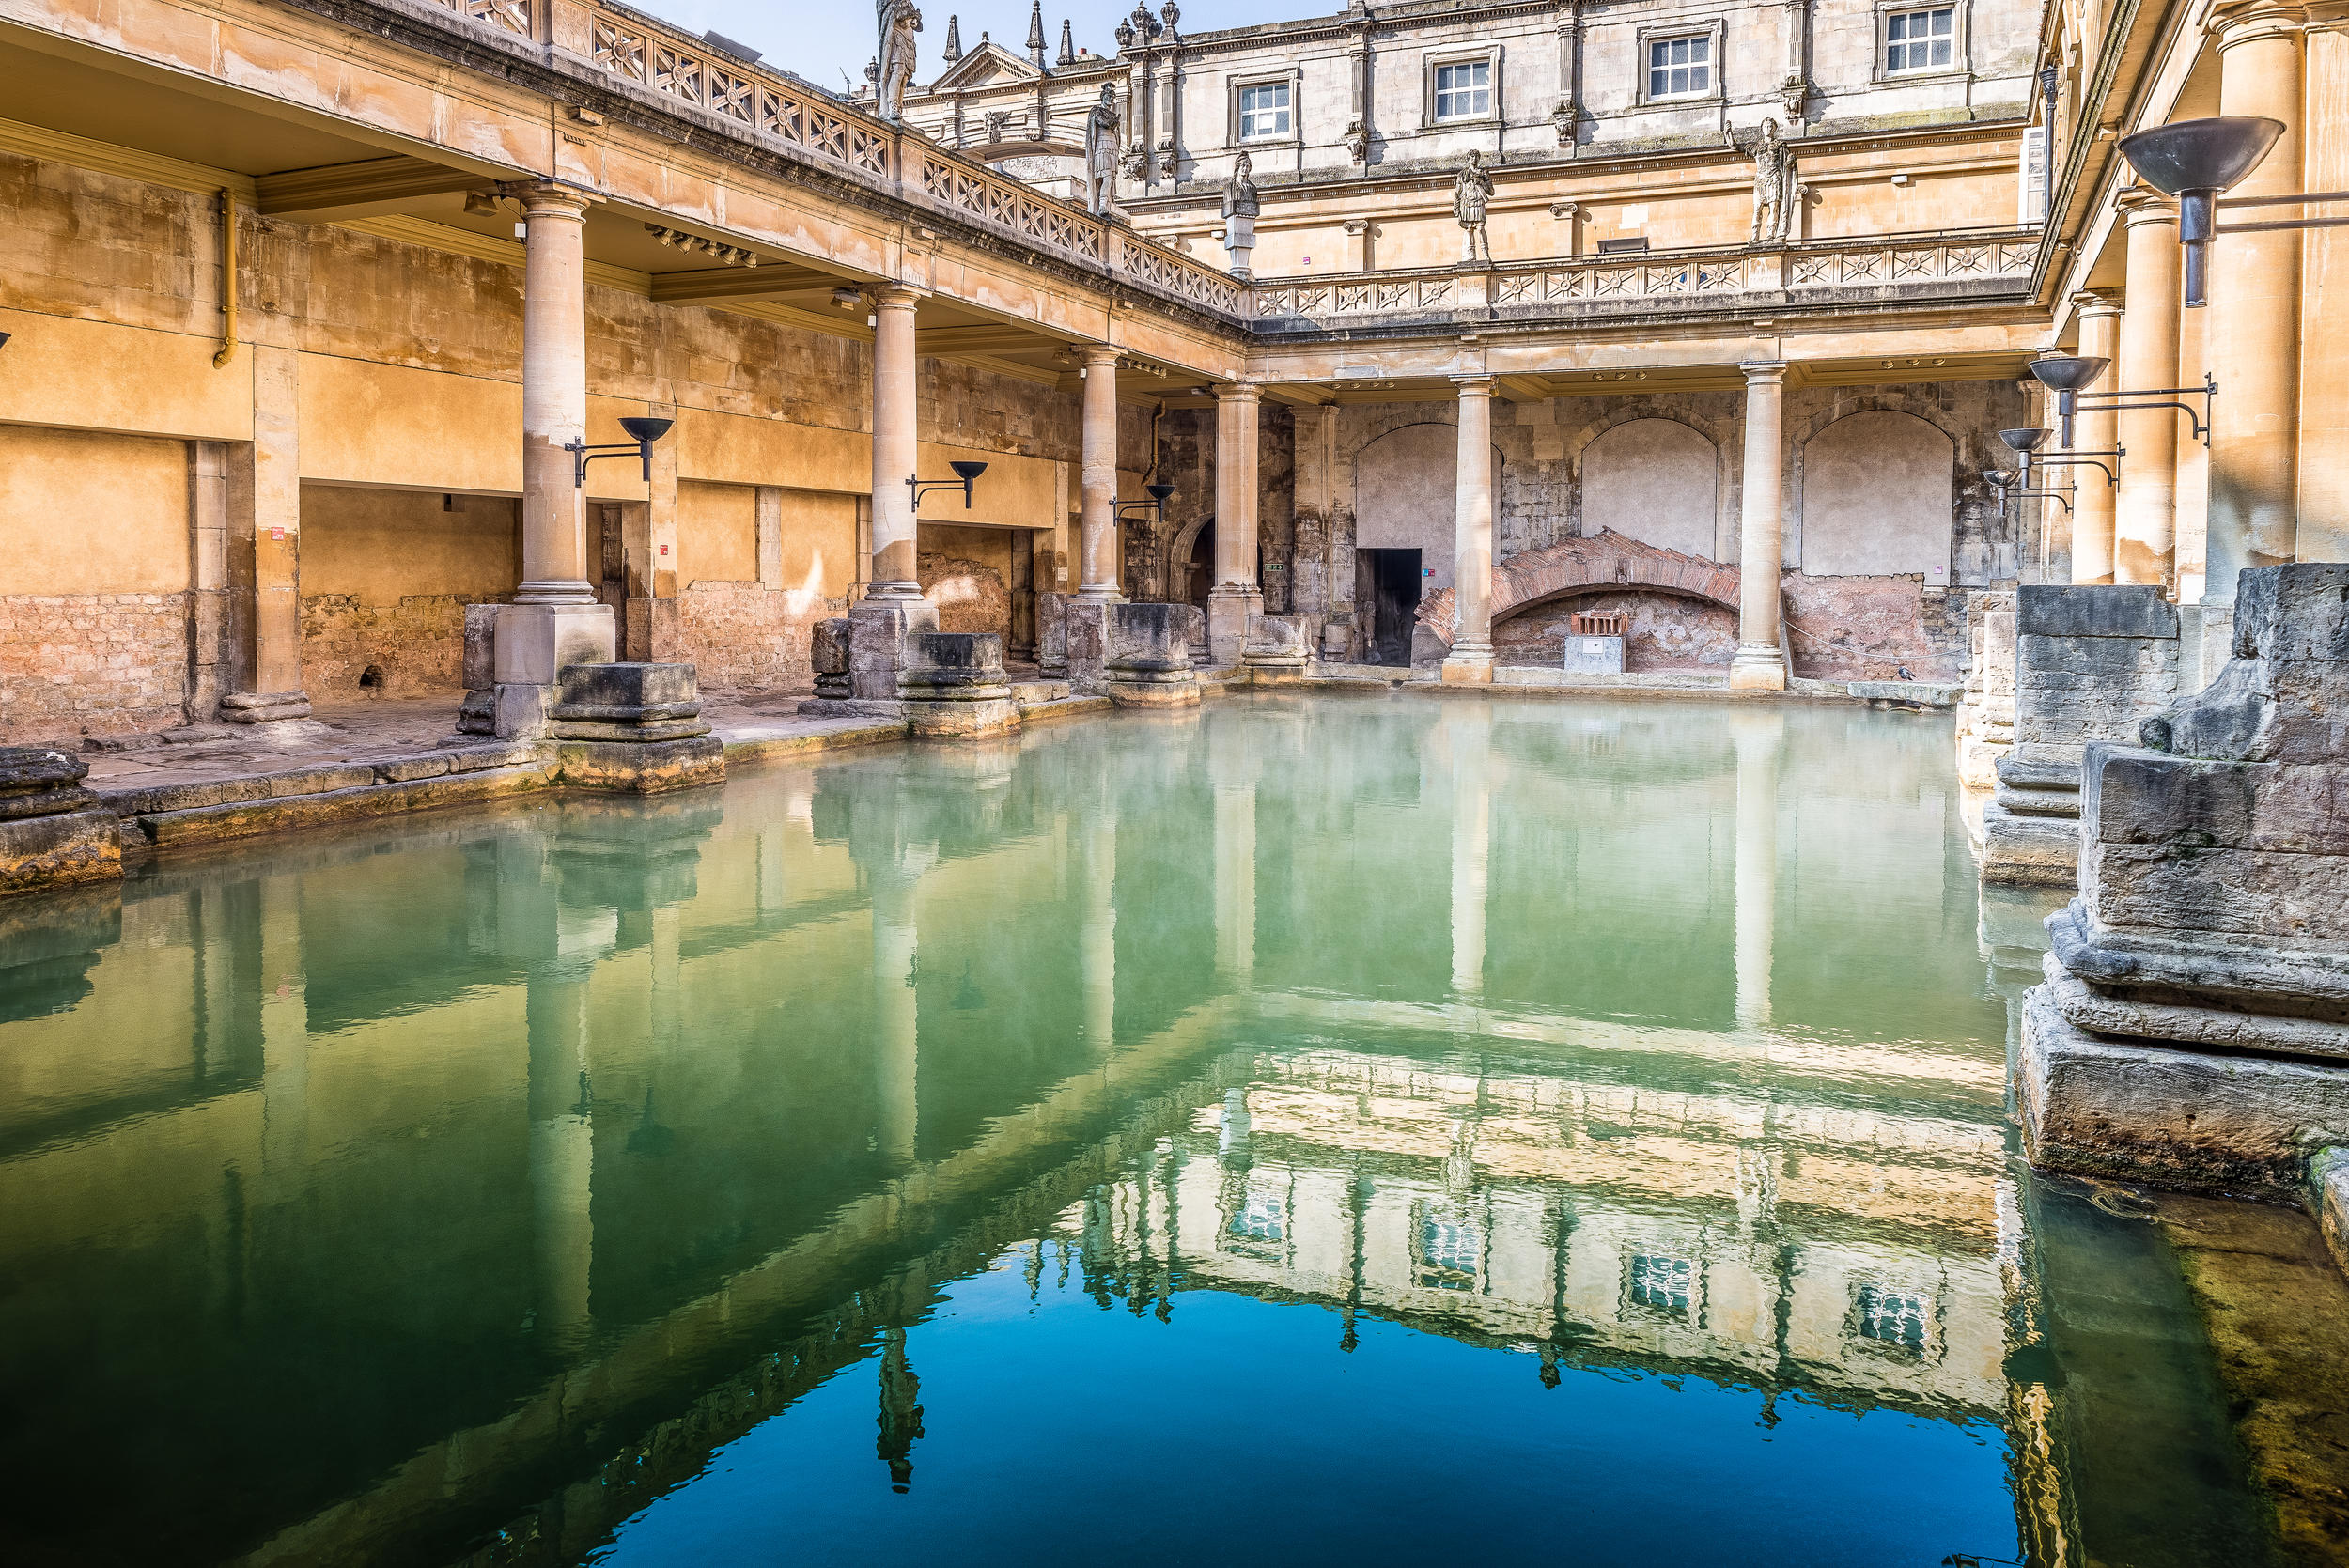 About | The Roman Baths